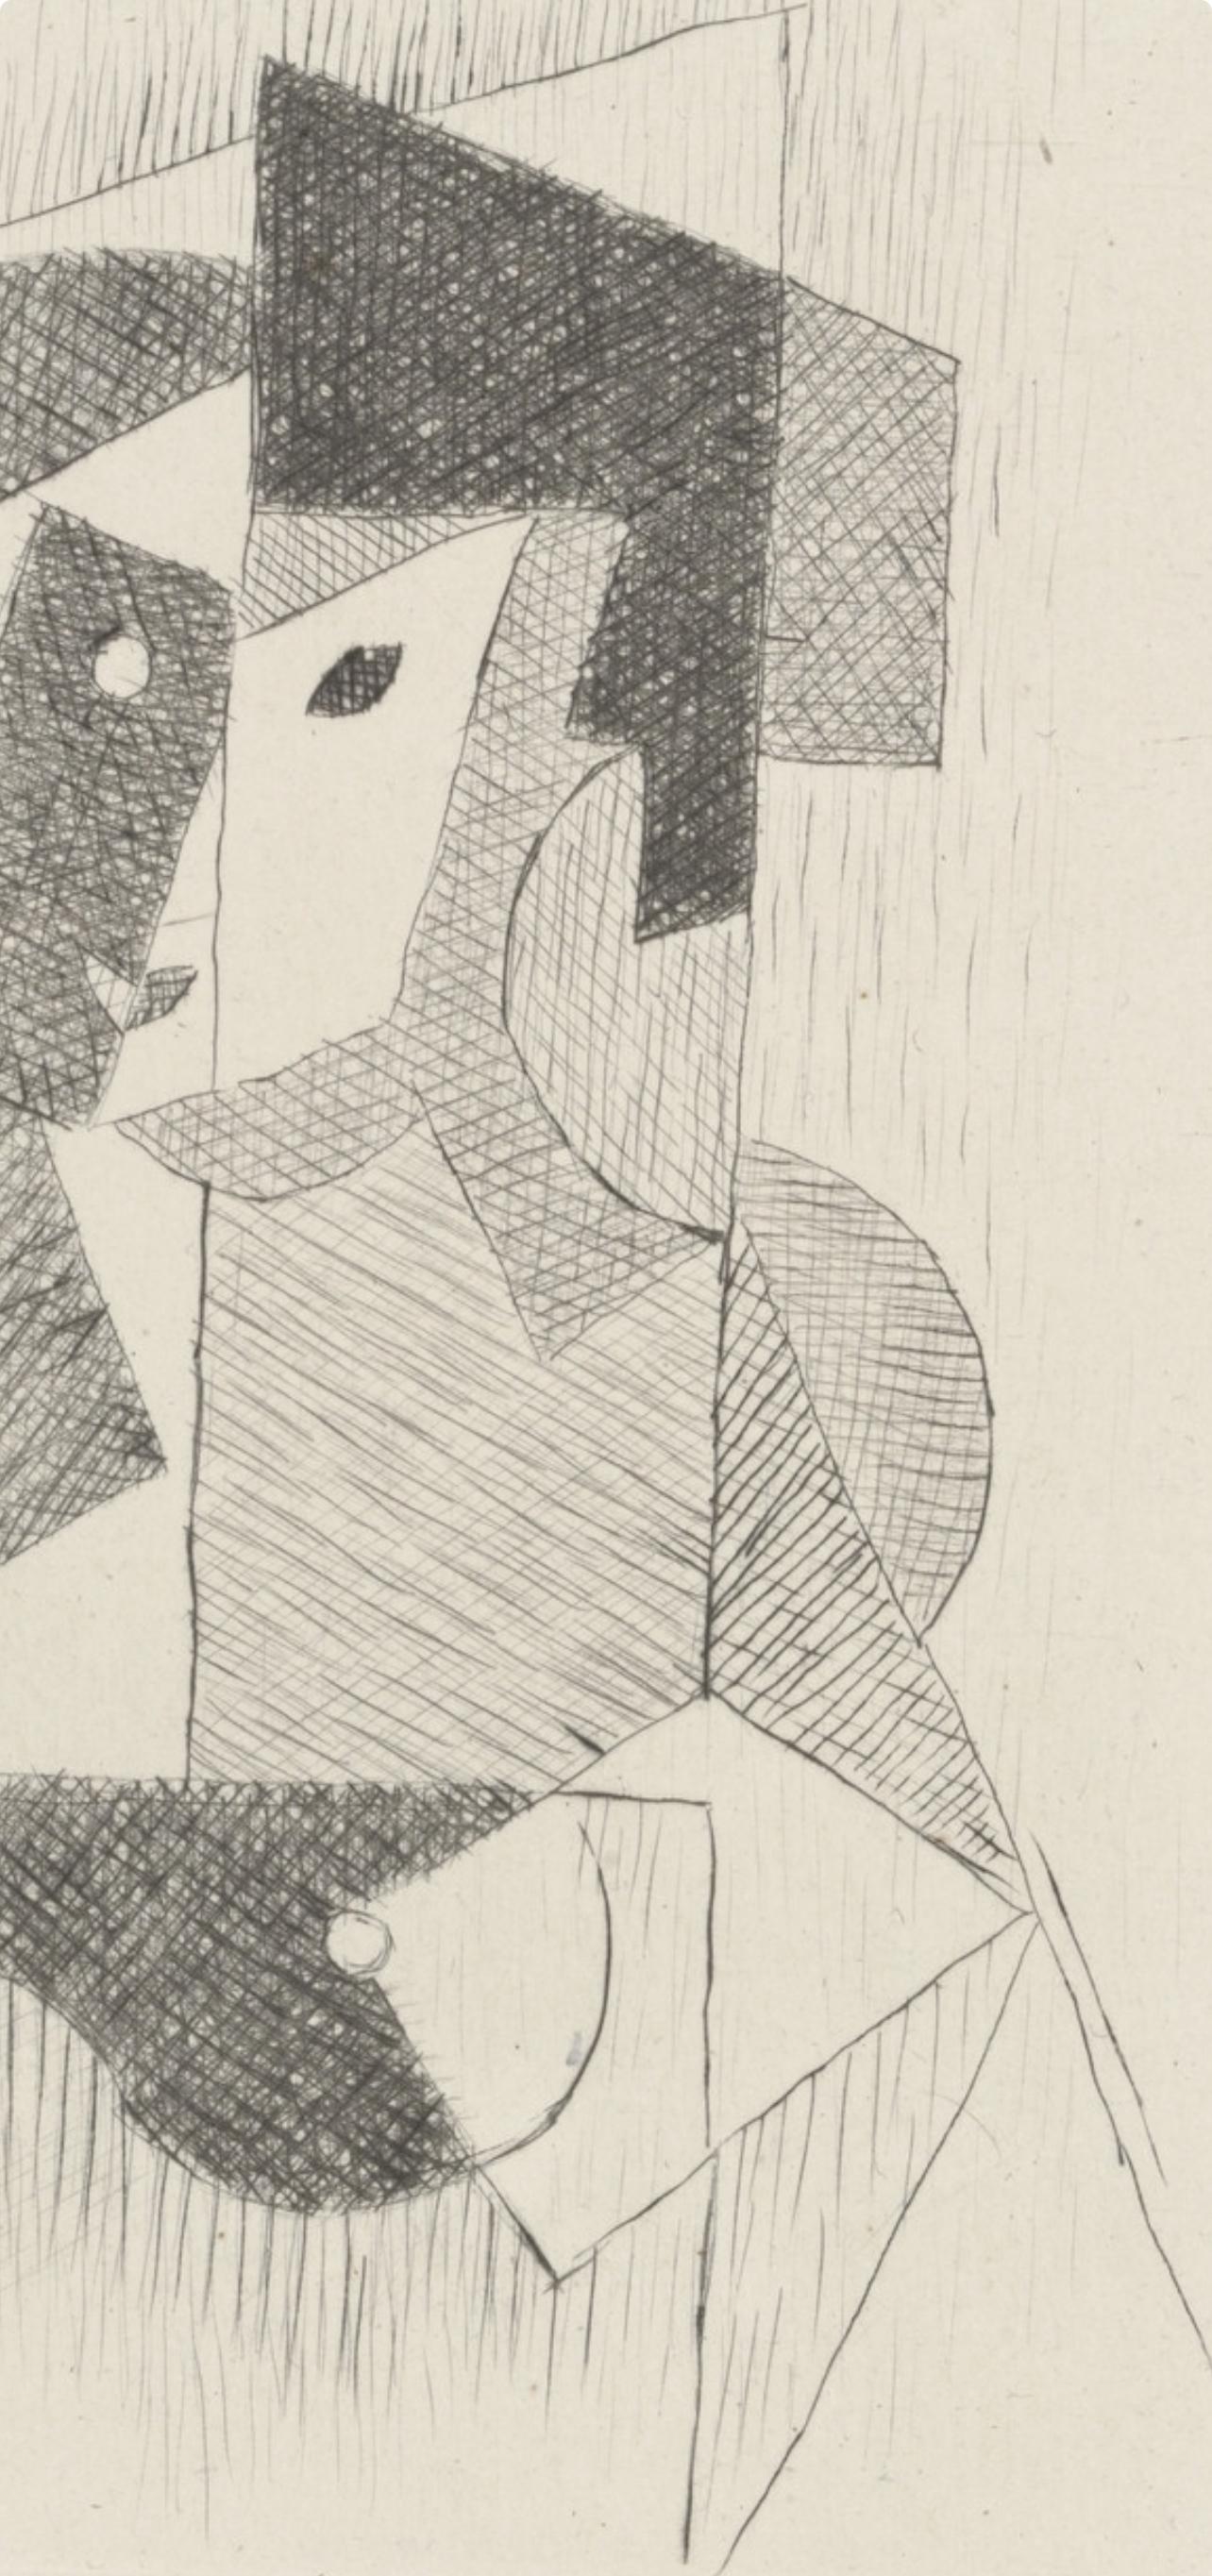 Metzinger, Femme à sa Toilette (Metzinger, AM-18-013), Du cubisme (nach) (Moderne), Print, von Jean Metzinger